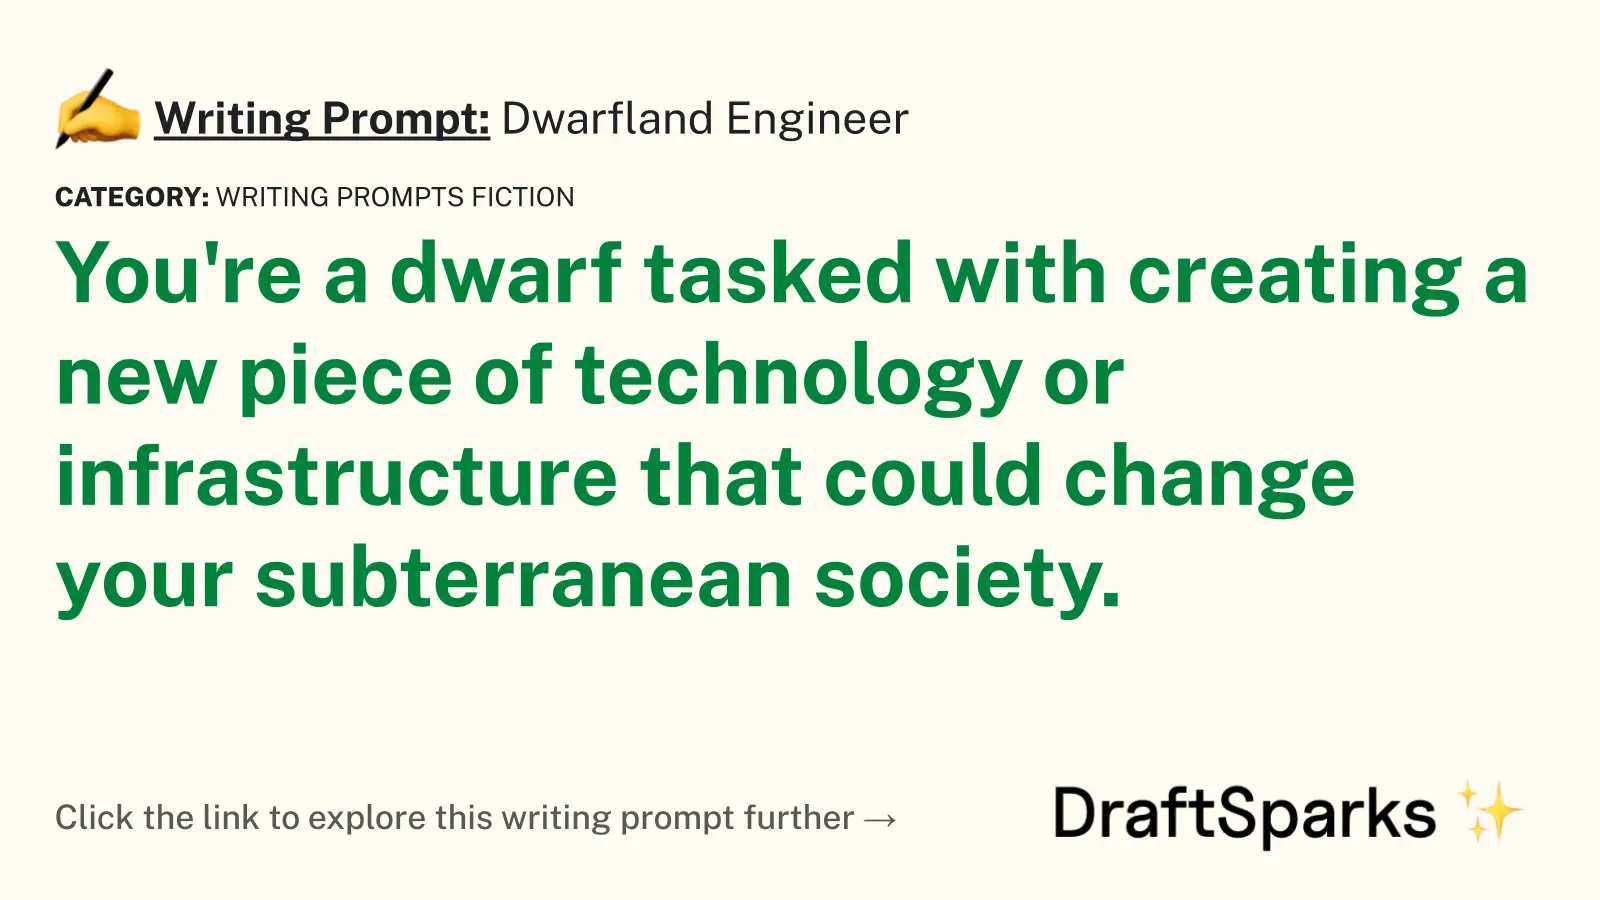 Dwarfland Engineer